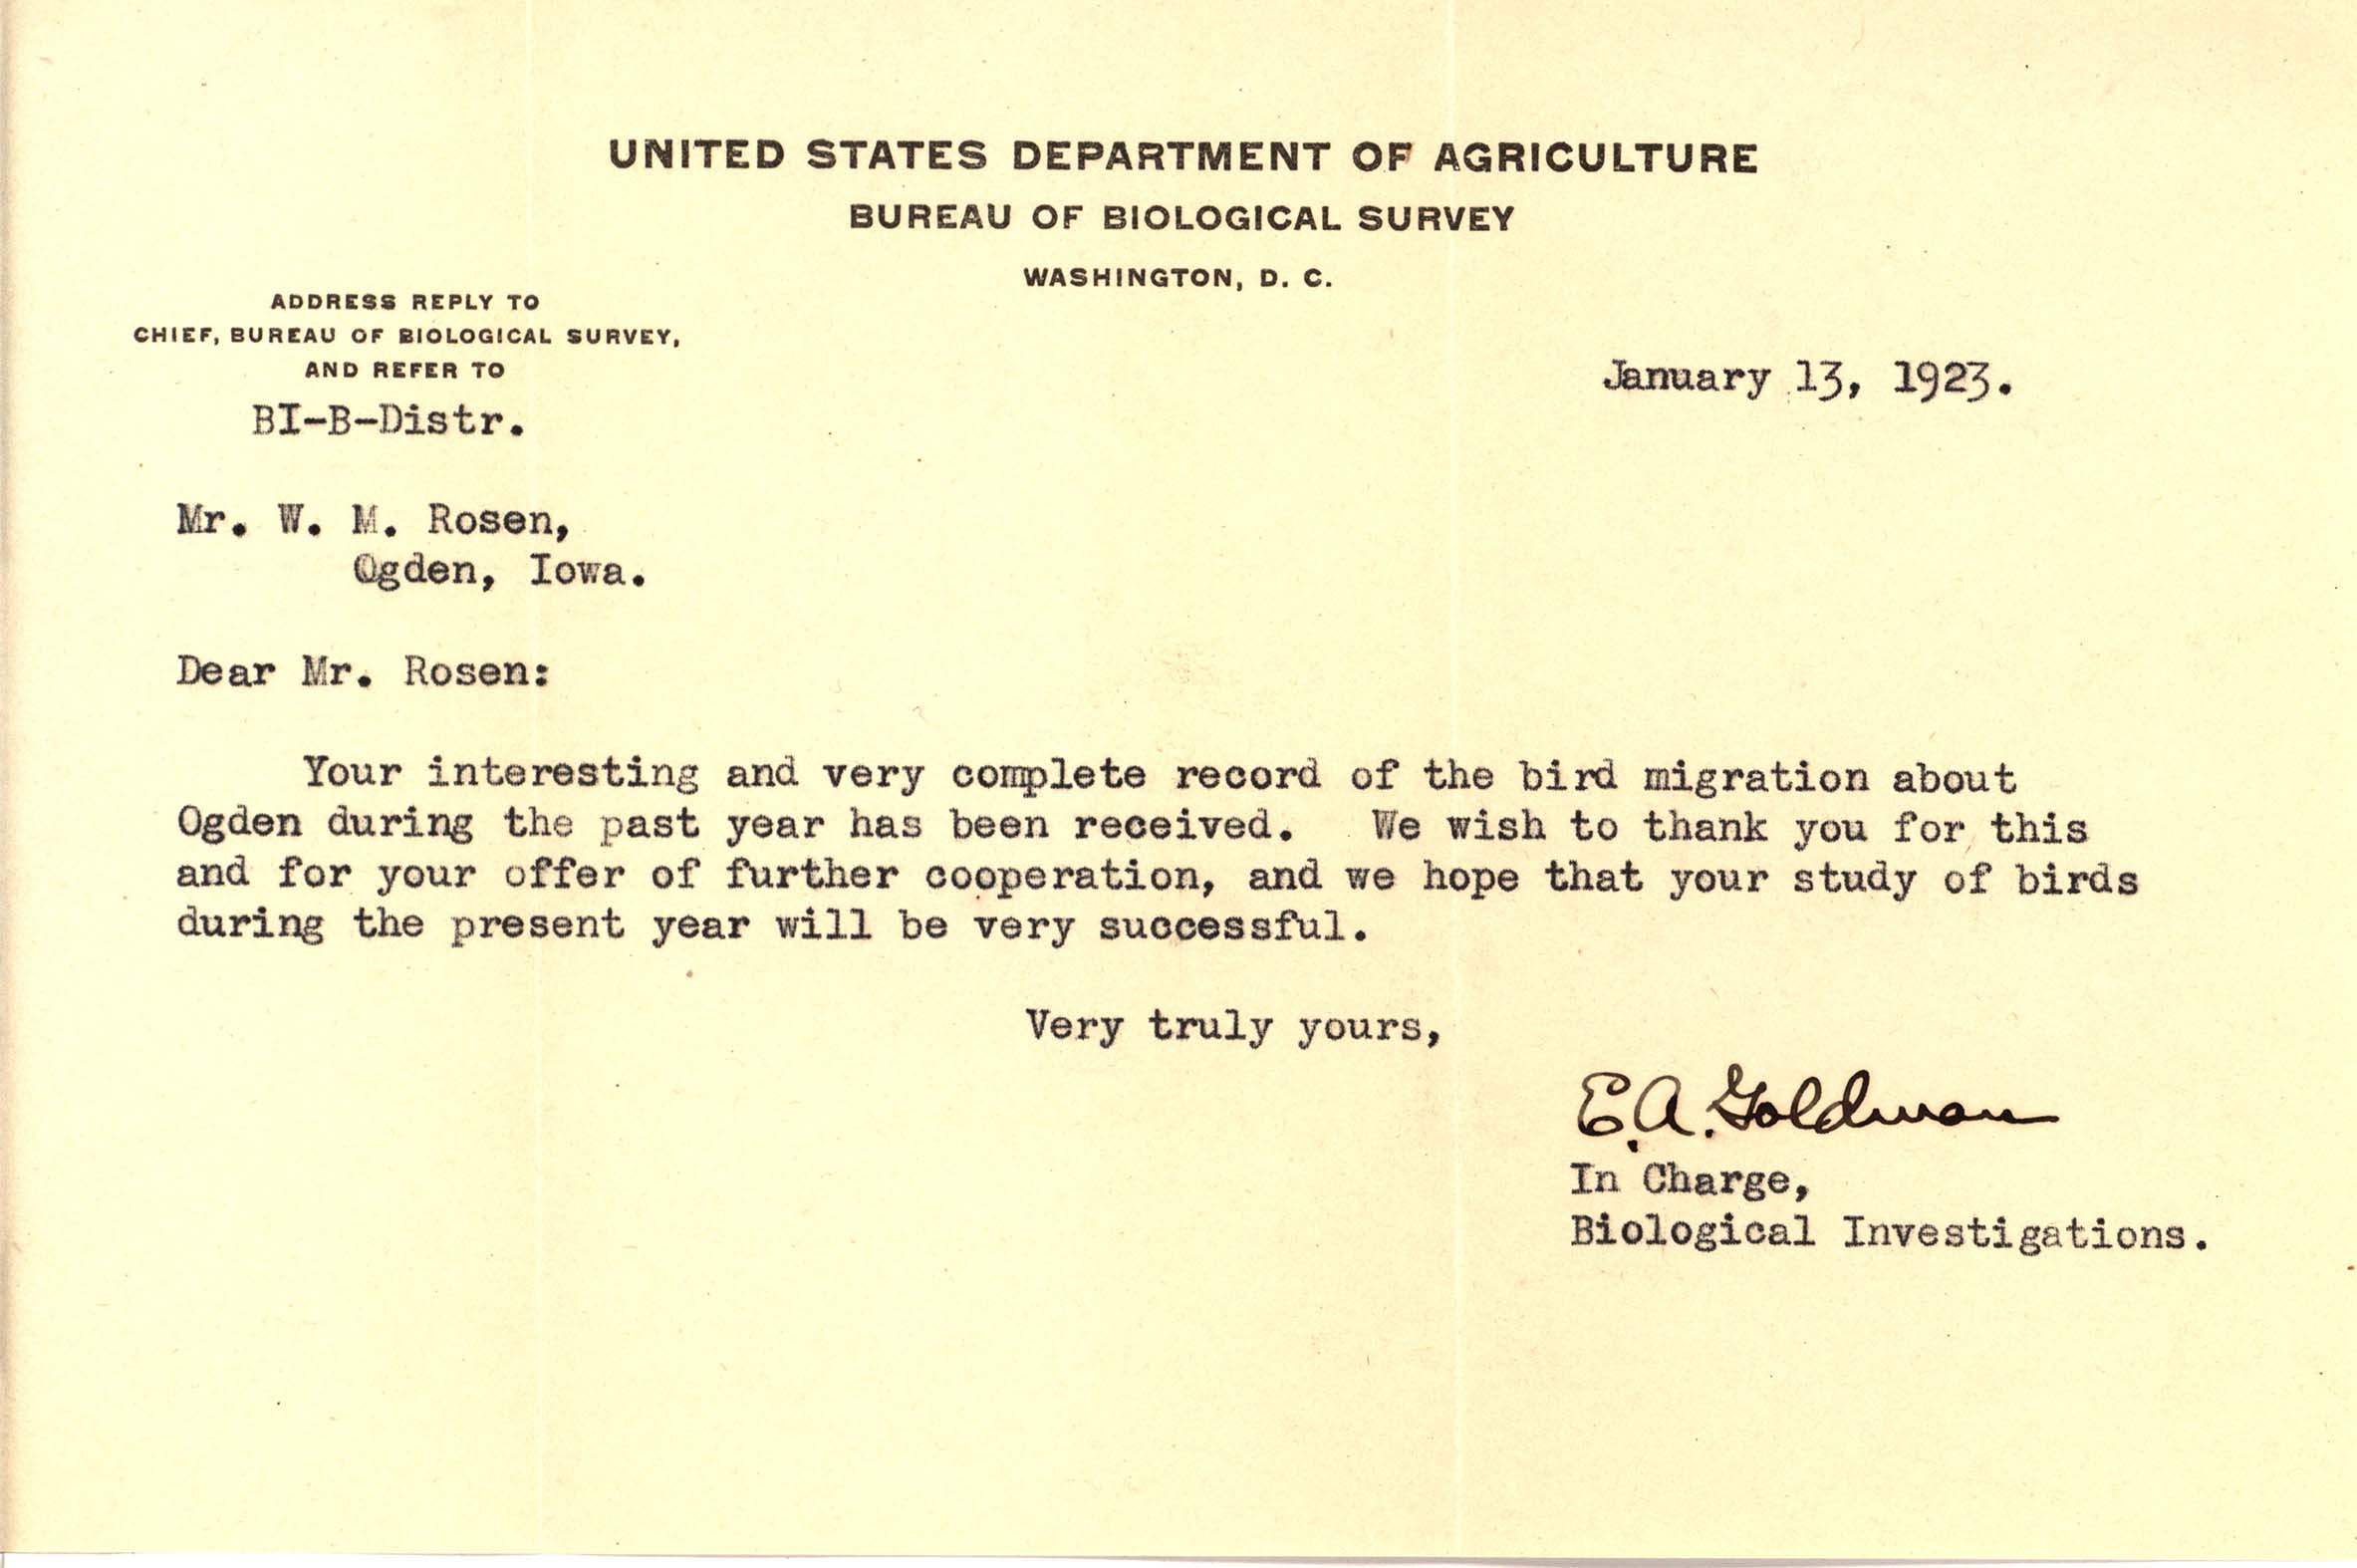 Edward Alphonso Goldman letter to Walter Rosene regarding the receipt of the 1922 bird migration report, January 13, 1923